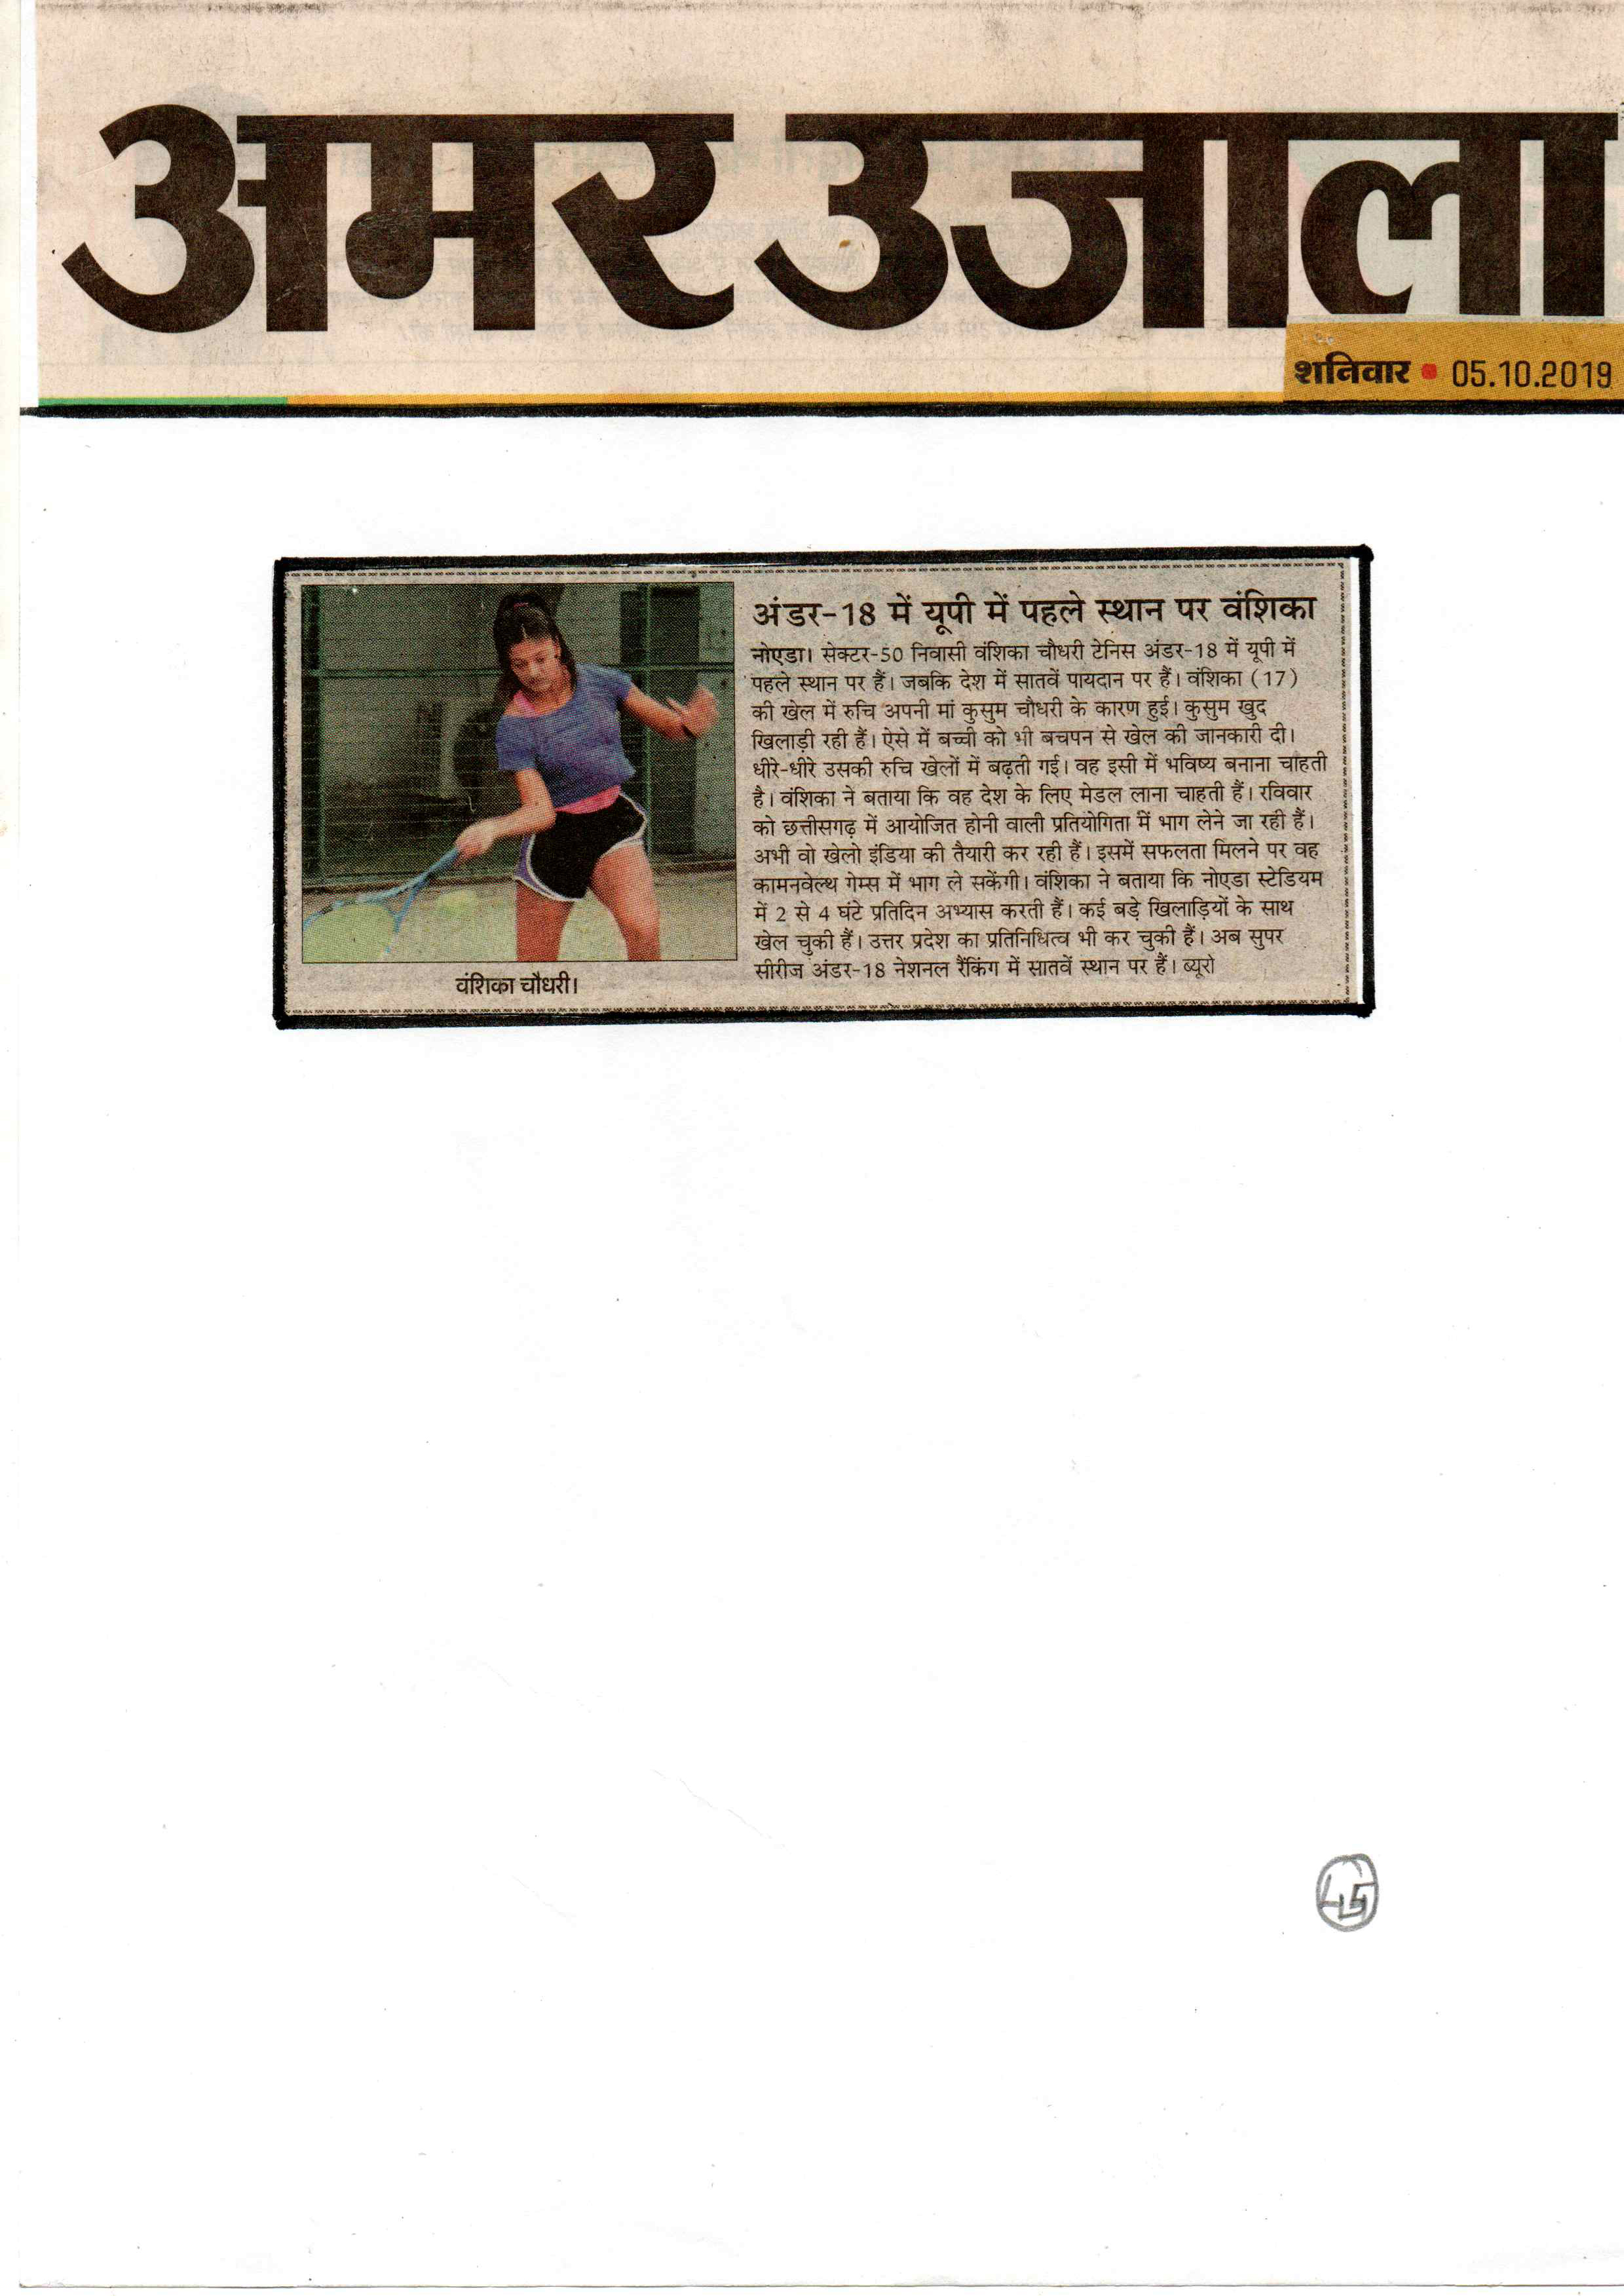 Achievement - Vanshika Chaudhary-U-18 U.P. State 1st position (Lawn Tennis) - Ryan International School, Sector 39